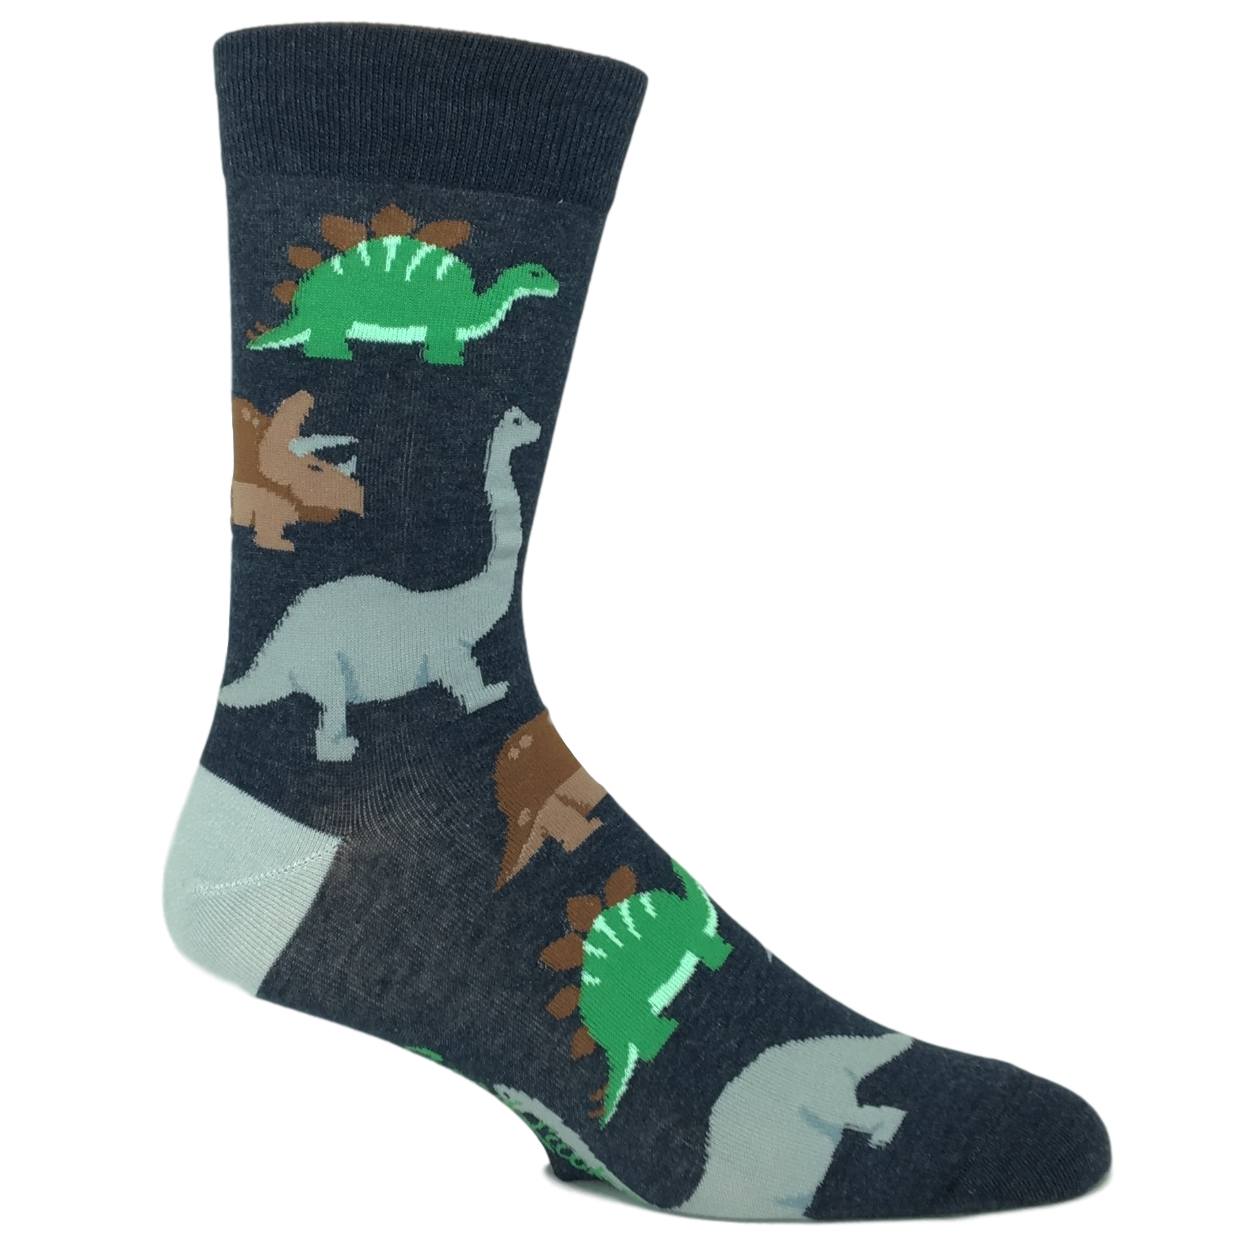 Jurassic Dinosaurs Socks by Good Luck Sock